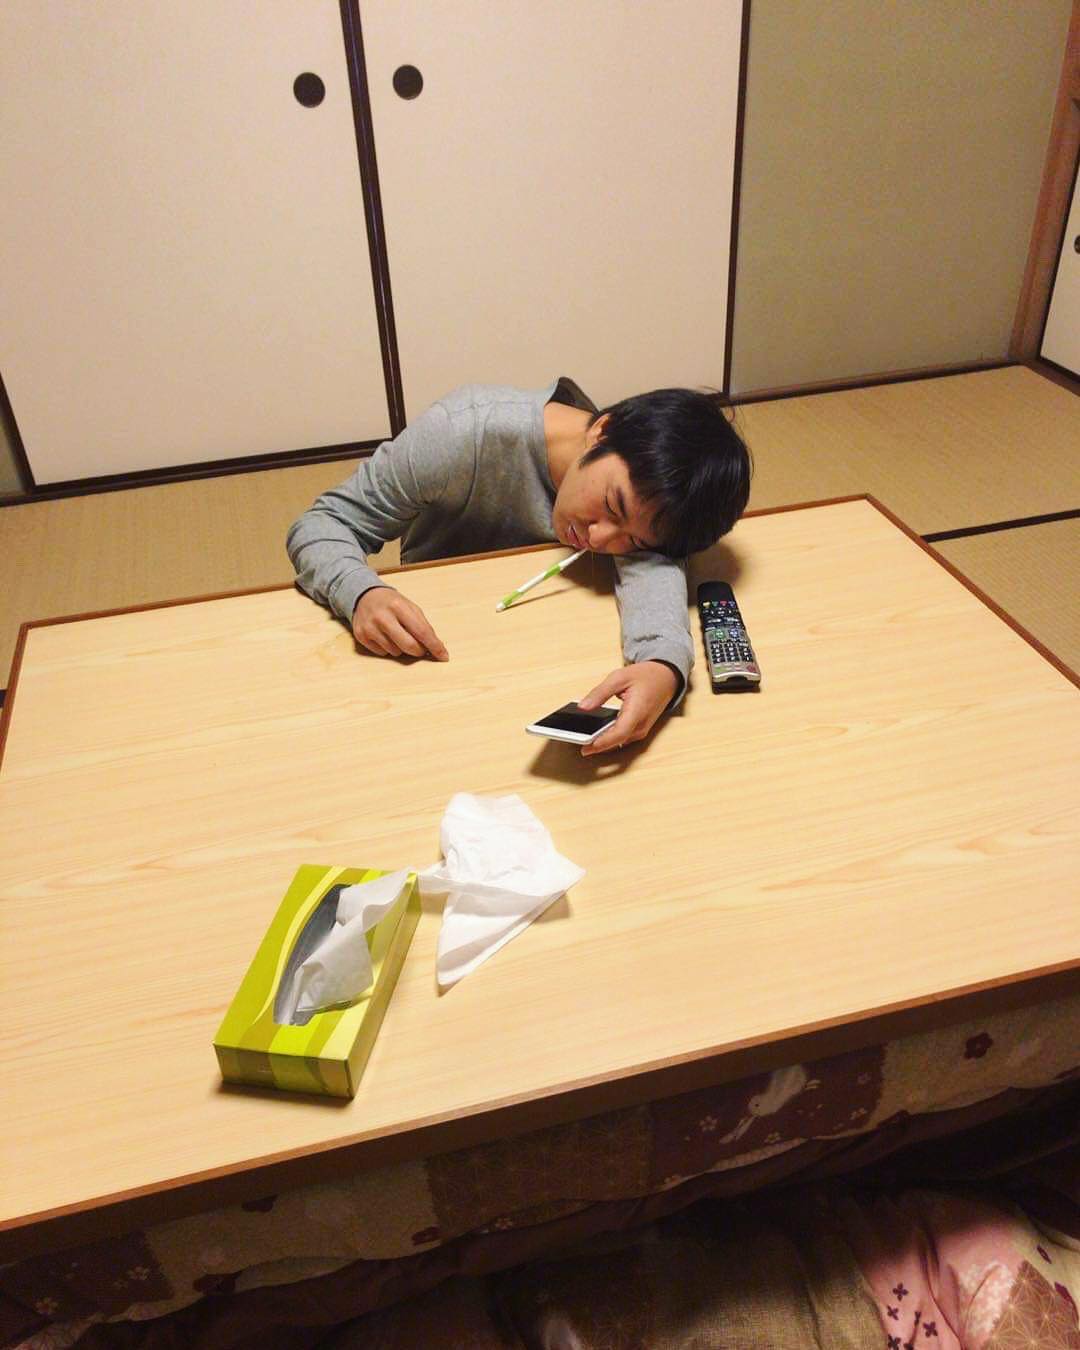 Jun, one of our producers, fell asleep while brushing teeth... Otsukaresama!! 歯磨きしながら寝るプロデューサー… お疲れ様です︎
.
.
.
.
.